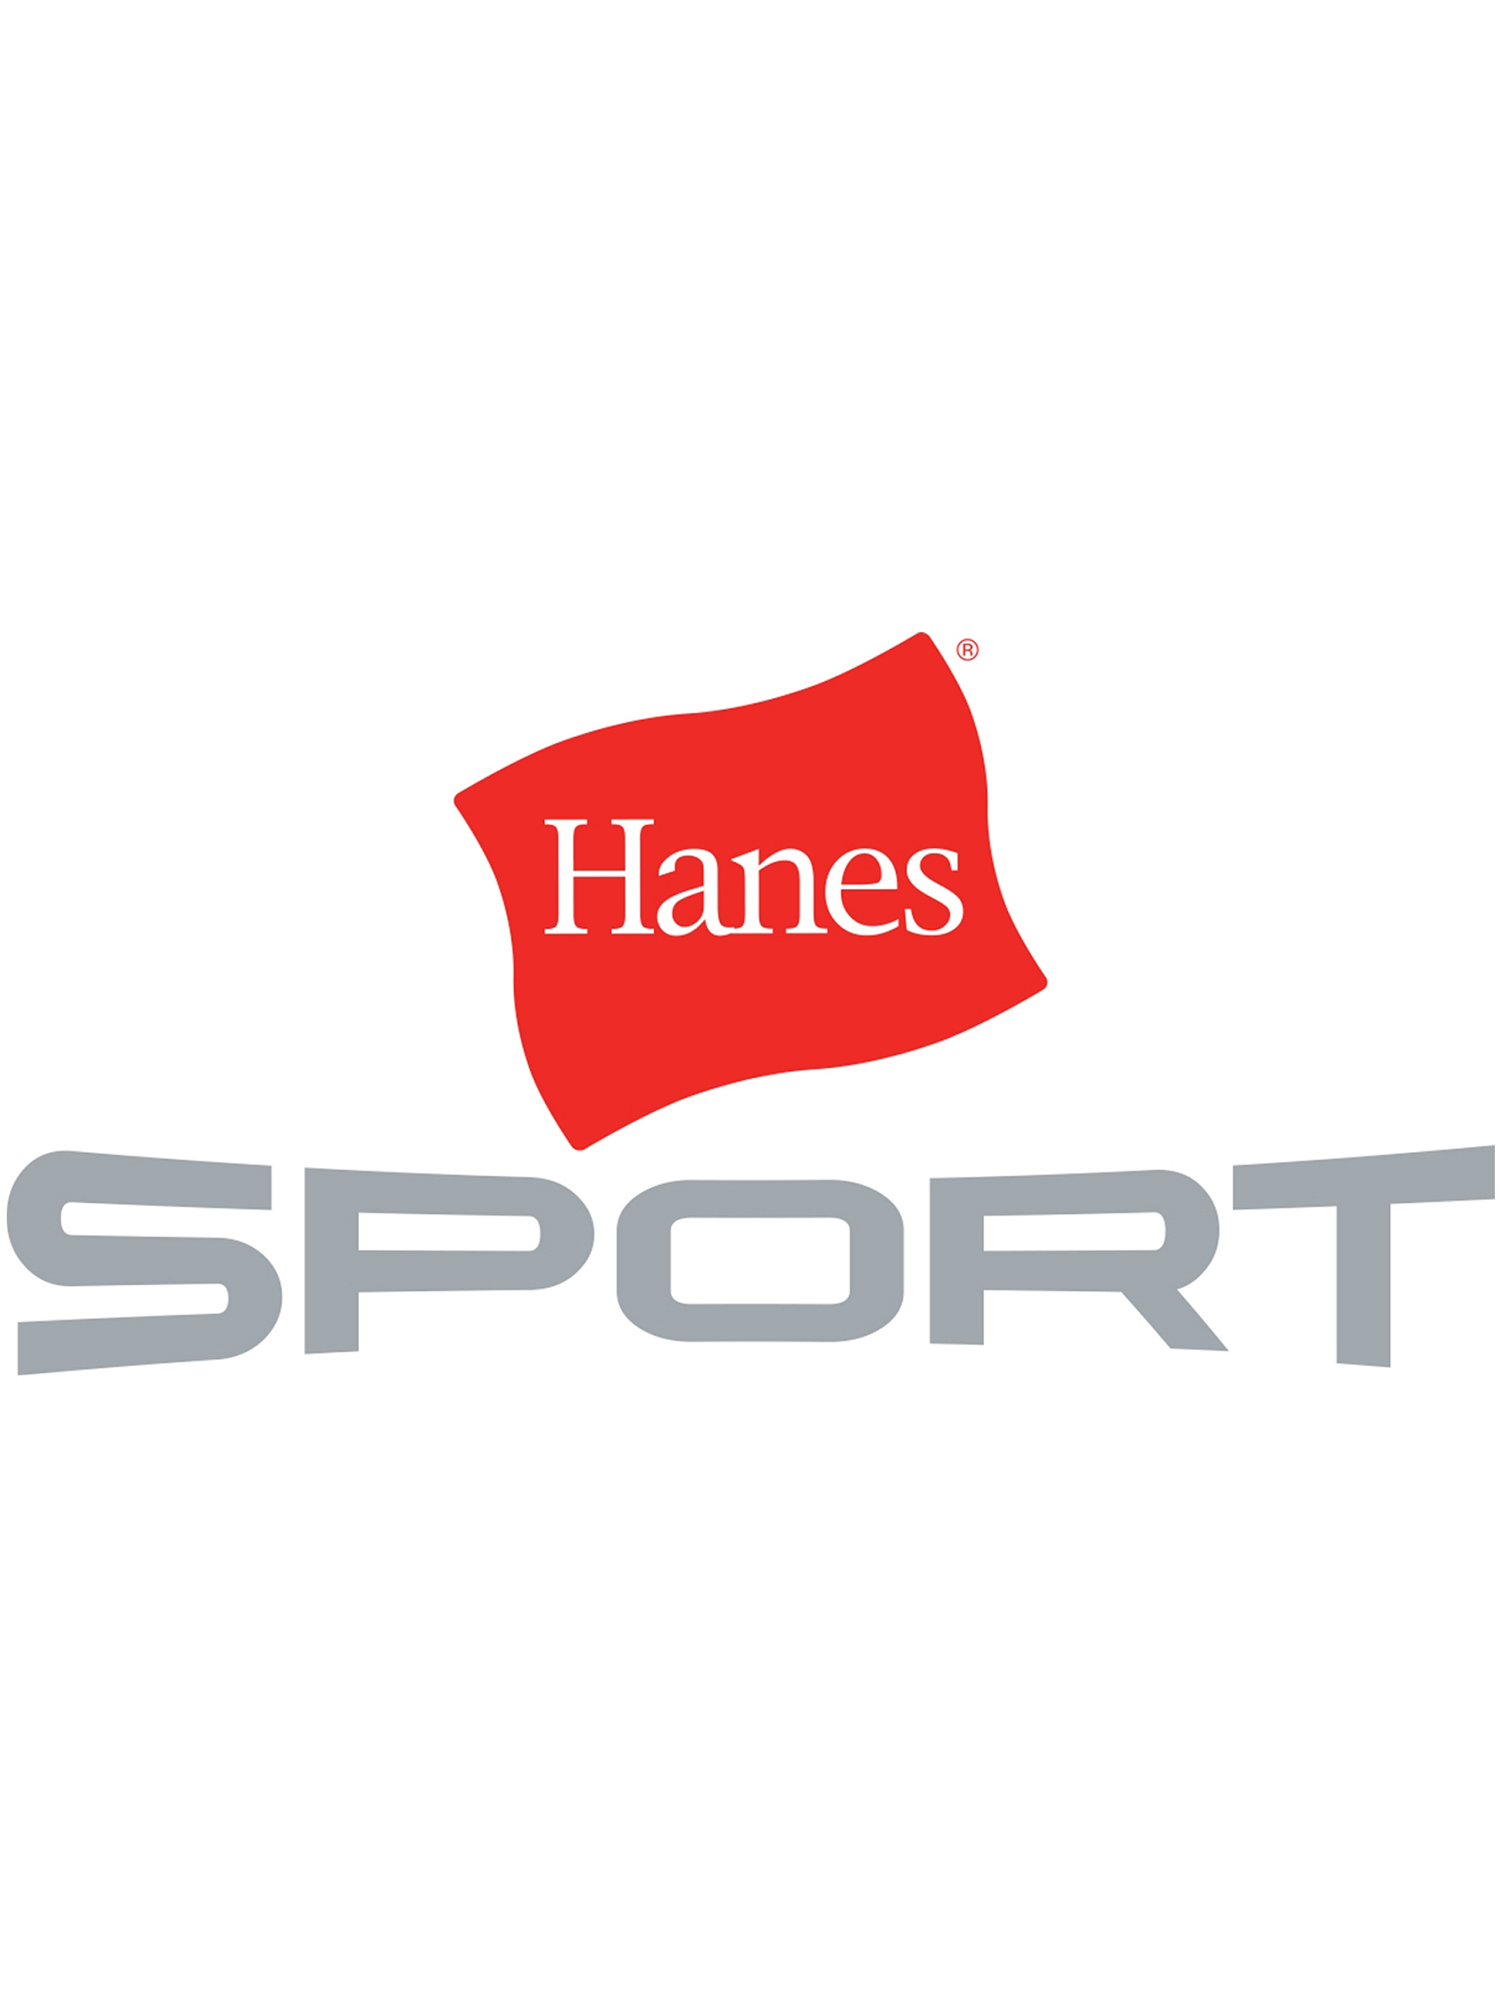 Hanes Sport Women's Performance Running Shorts - image 4 of 5